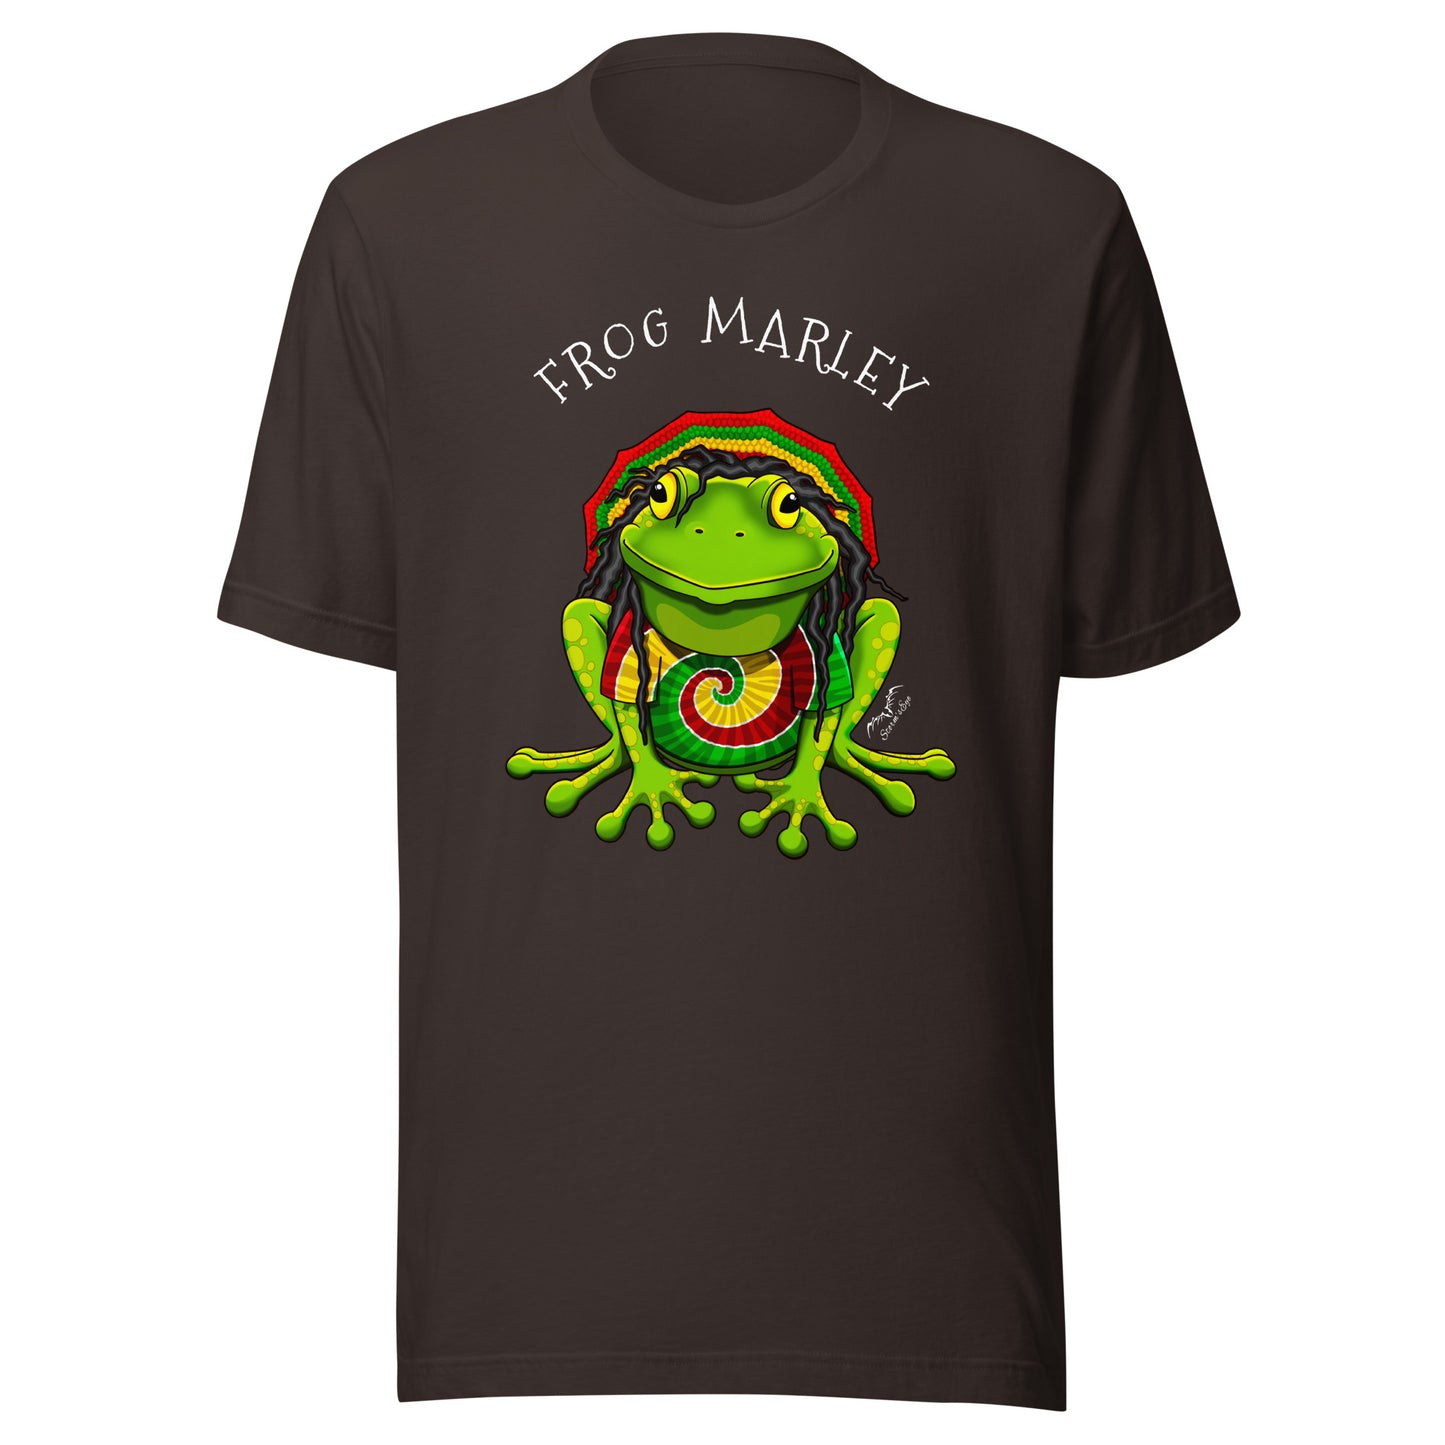 stormseye design frog marley reggae T shirt, flat view brown